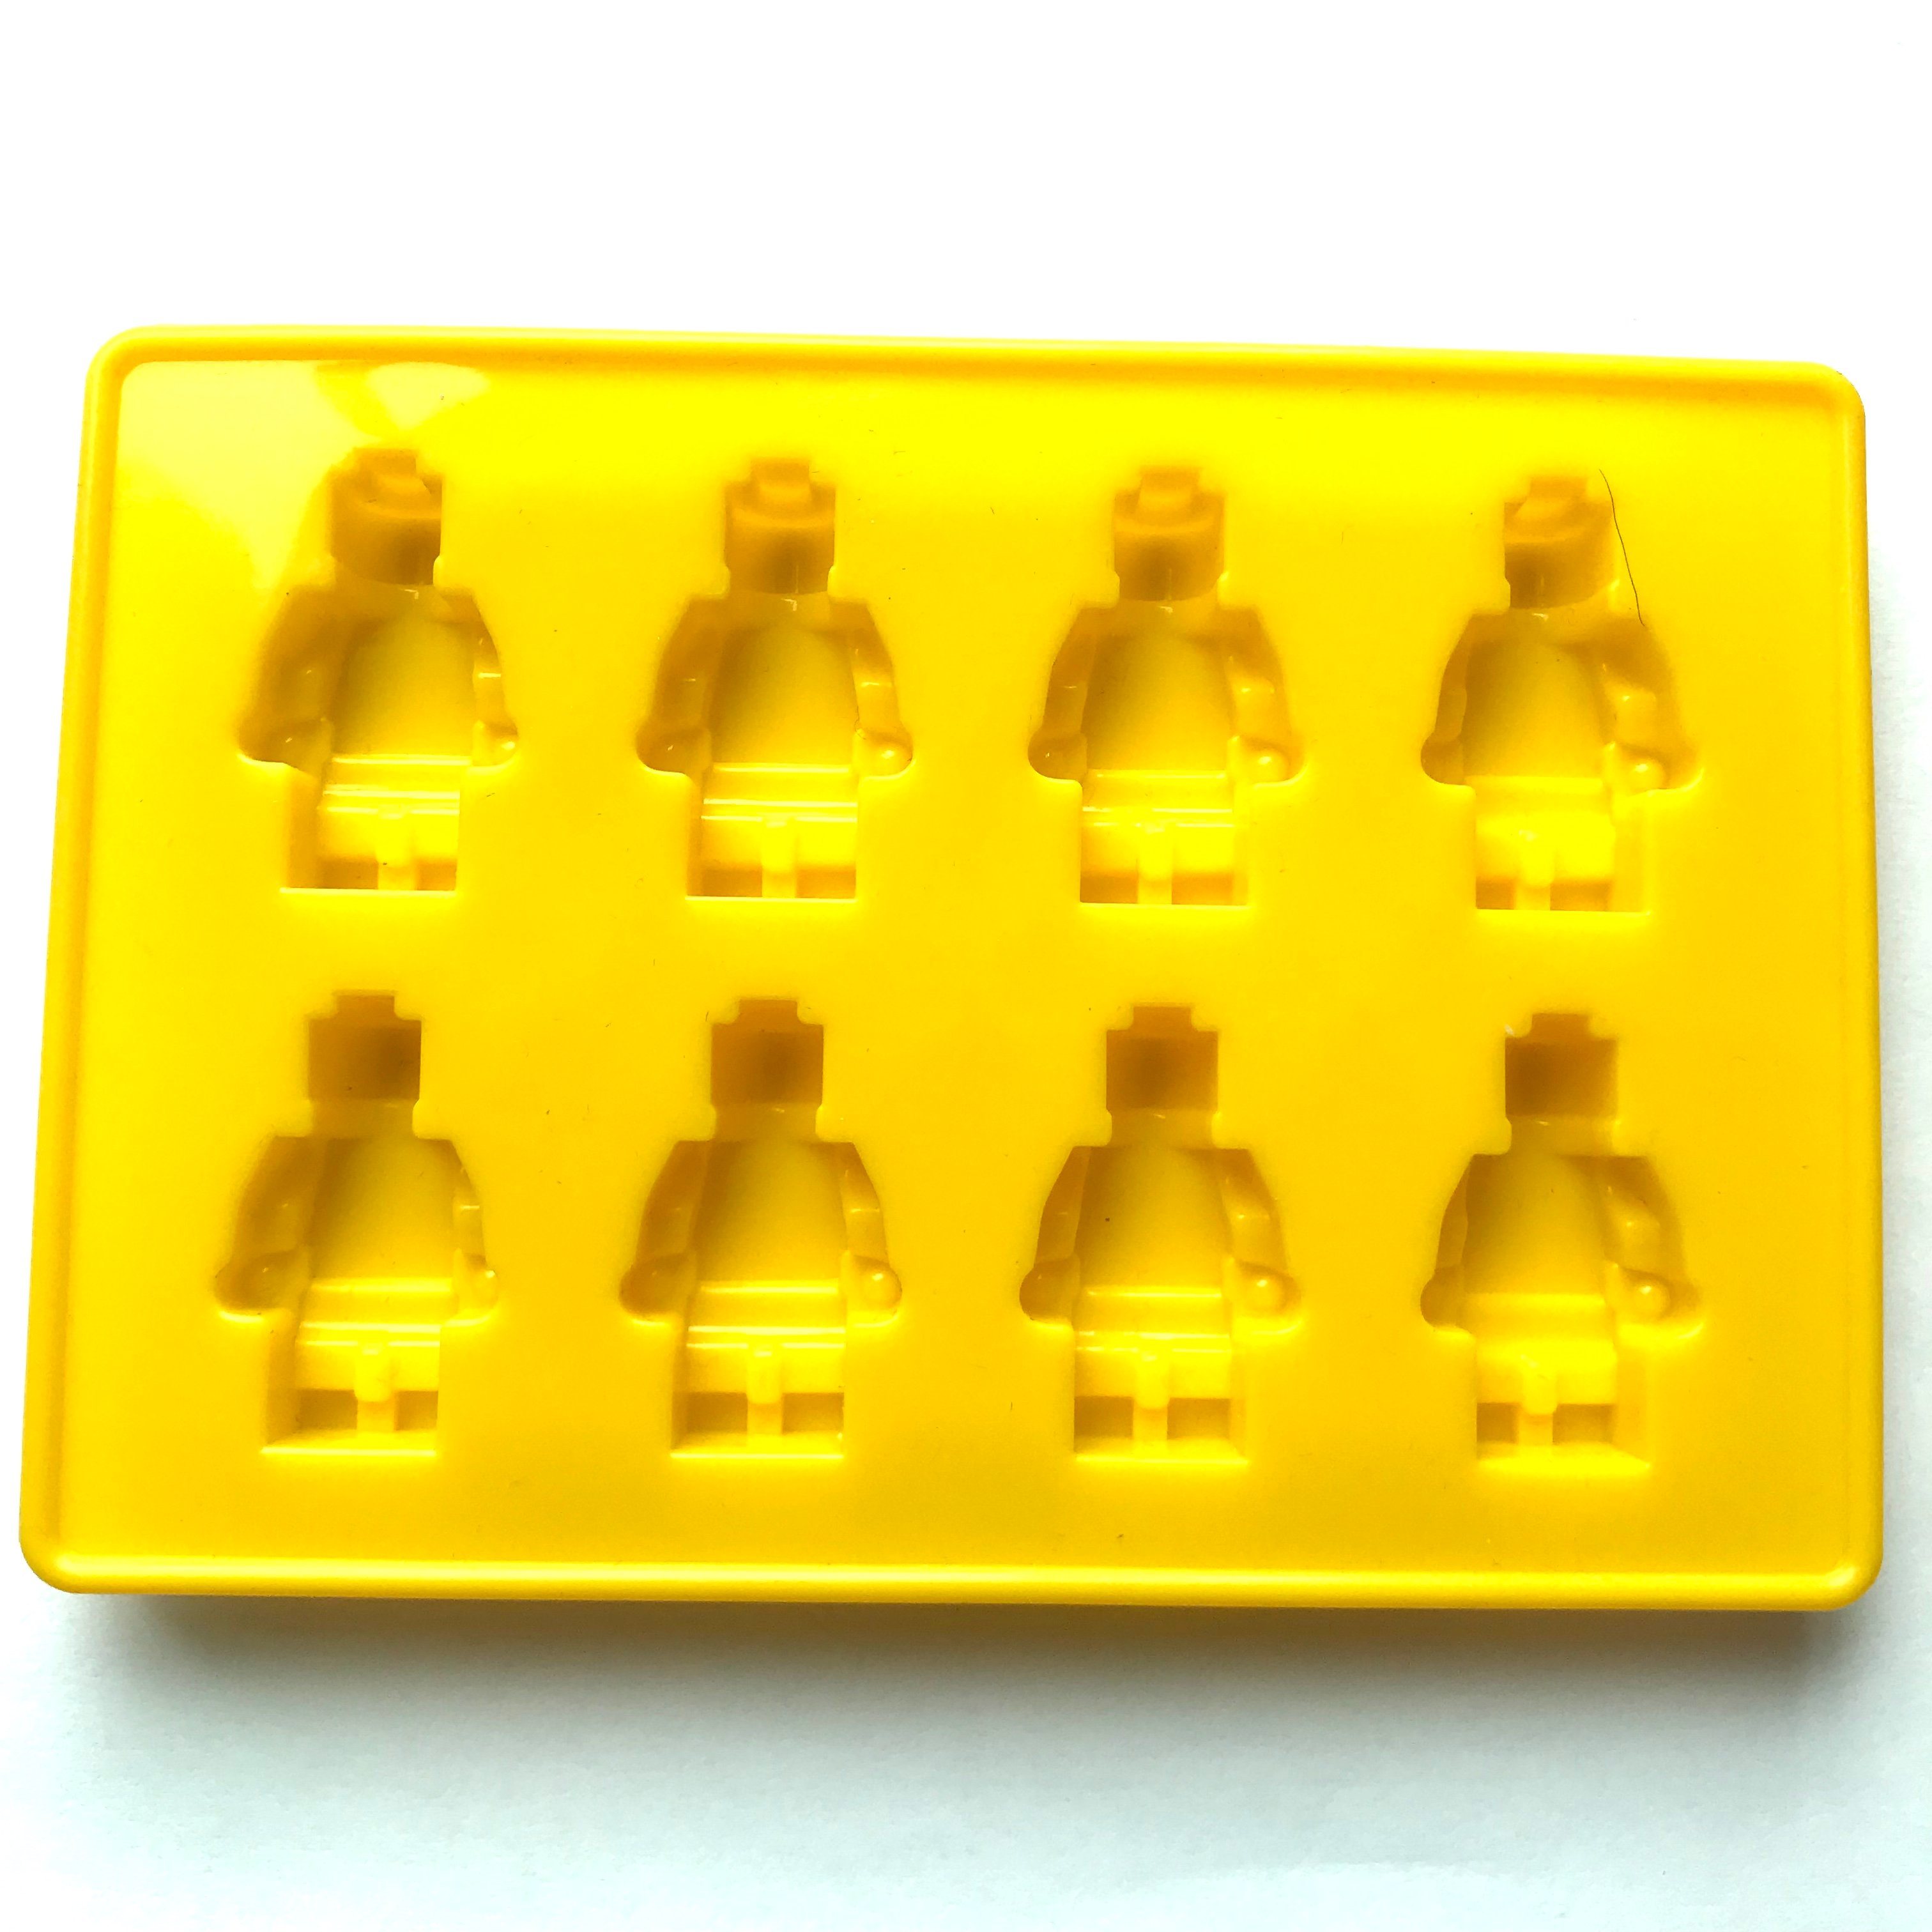 Lego Shaped Silicone Rubber Cake Chocolate Mold